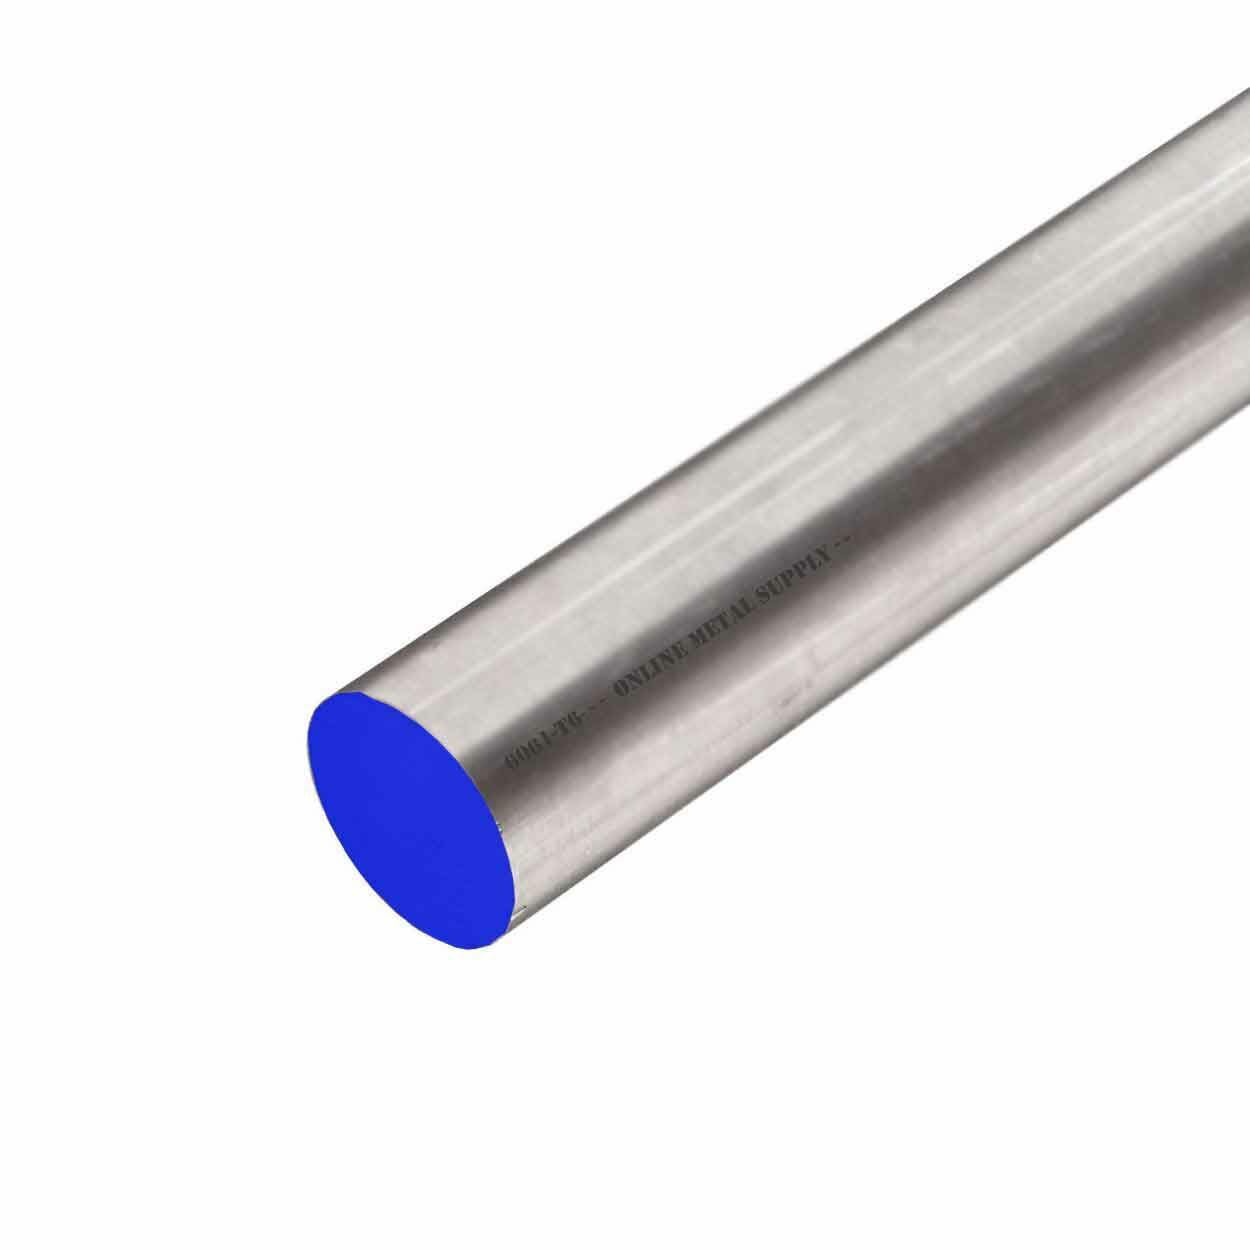 Round Aluminum Bar Grade 6061-T6511 1.625 Inch X 12 Feet 